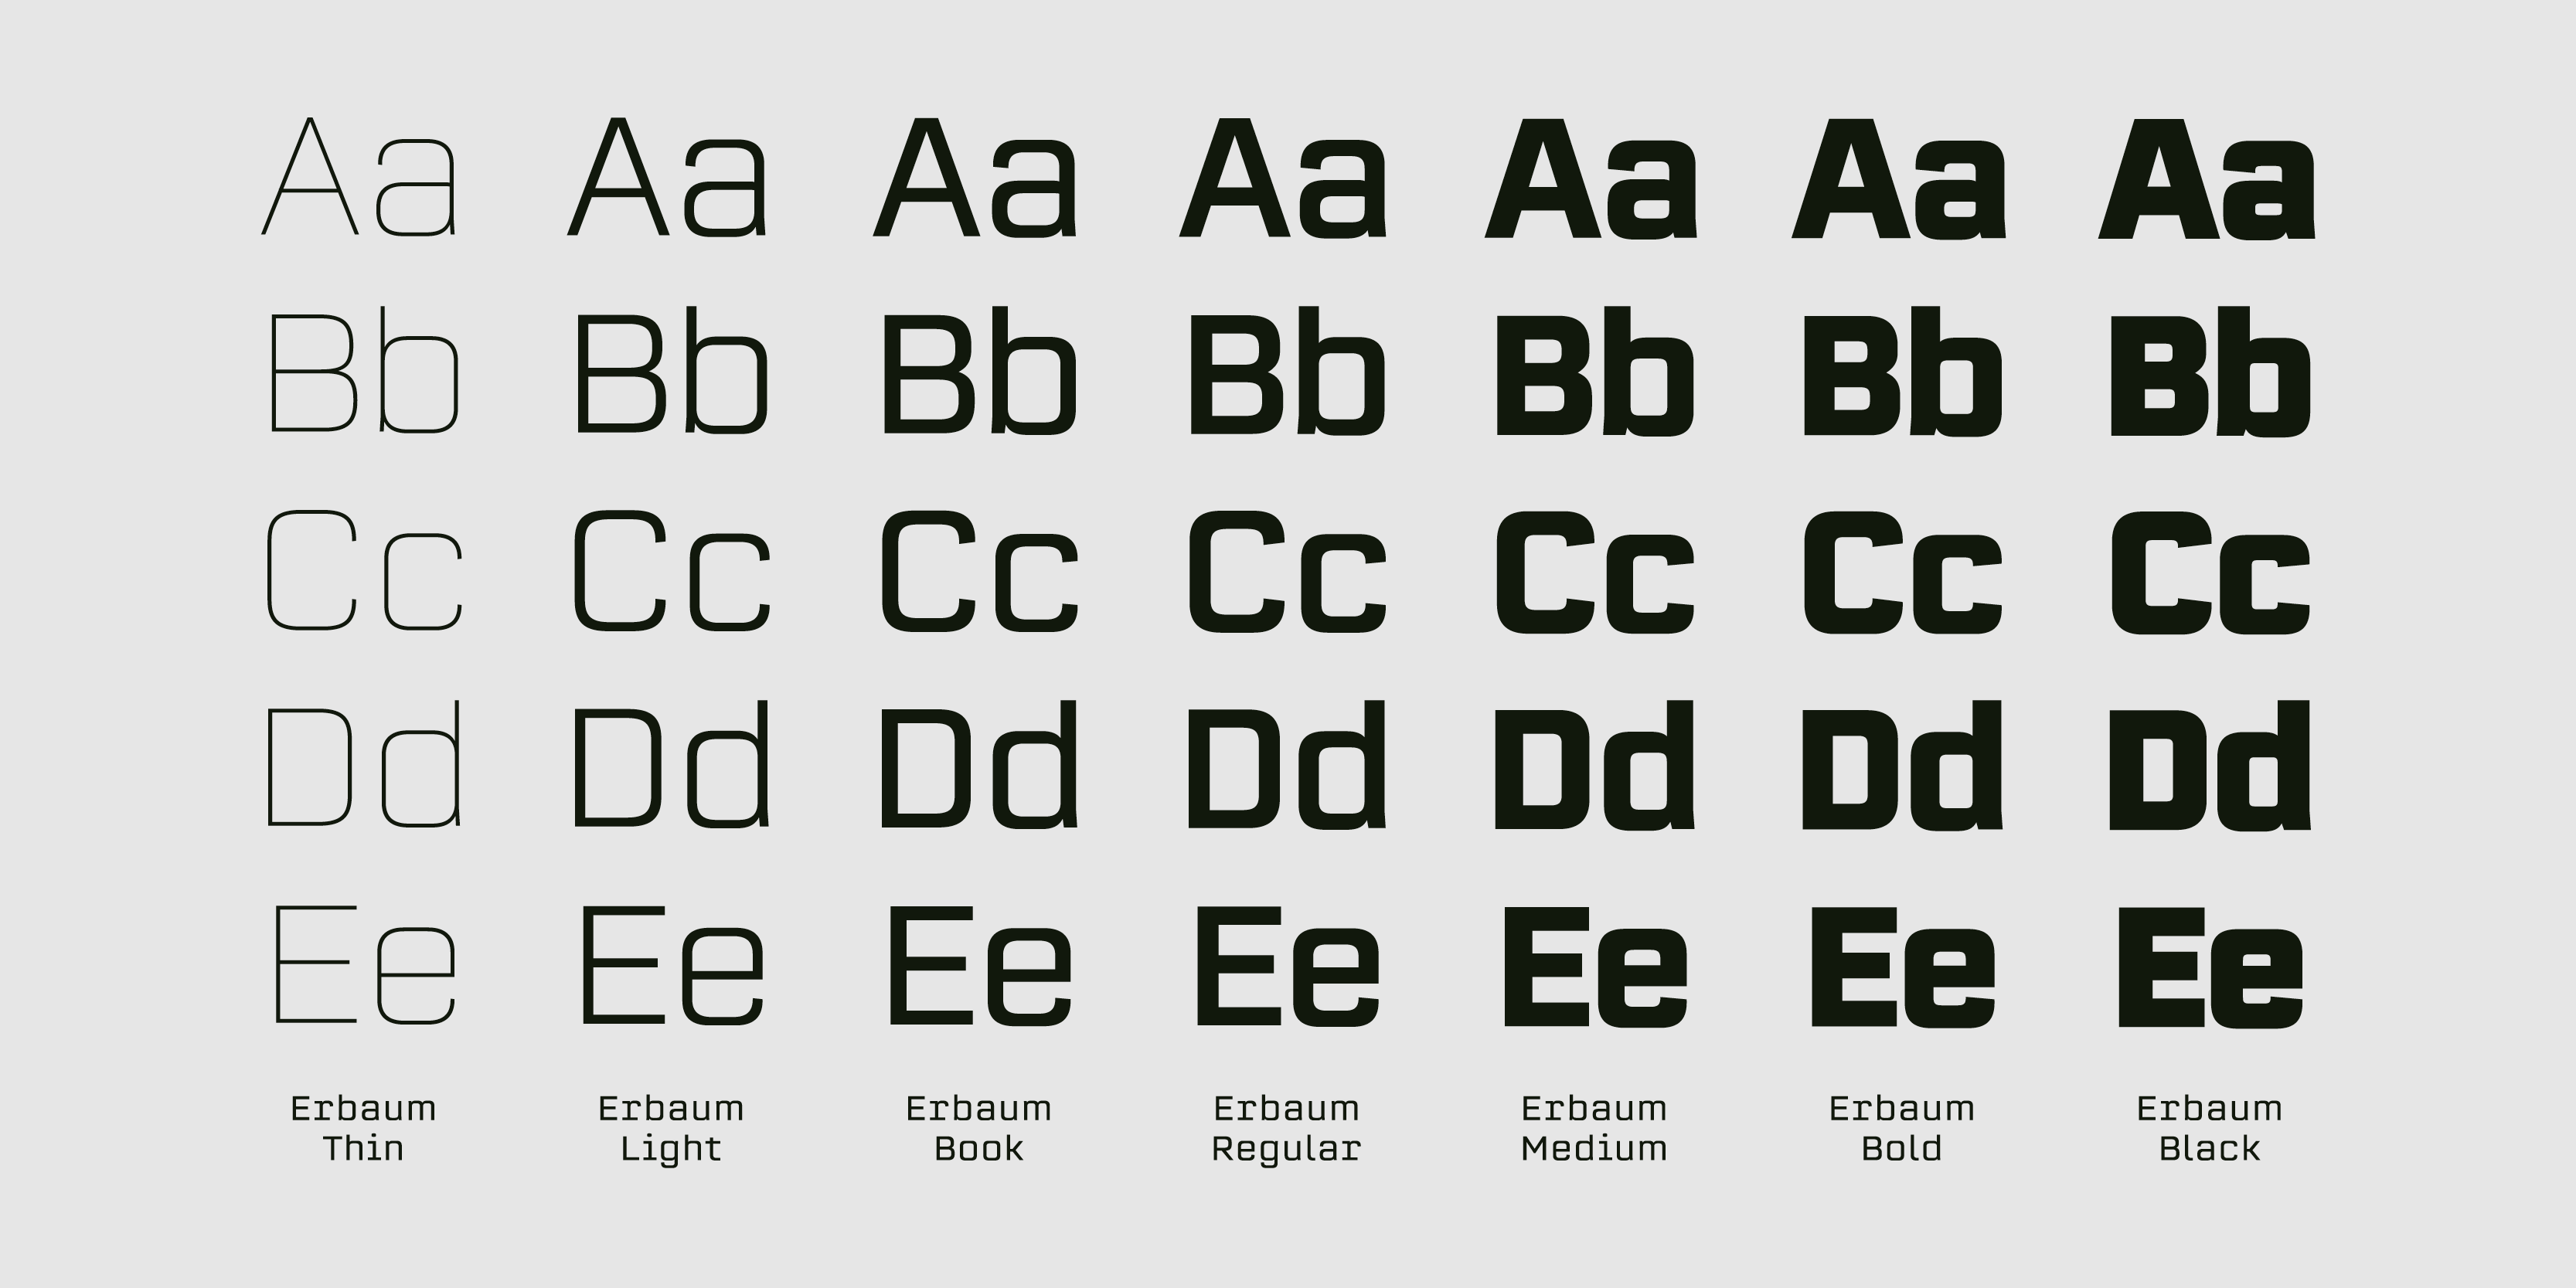 Card displaying Erbaum typeface in various styles